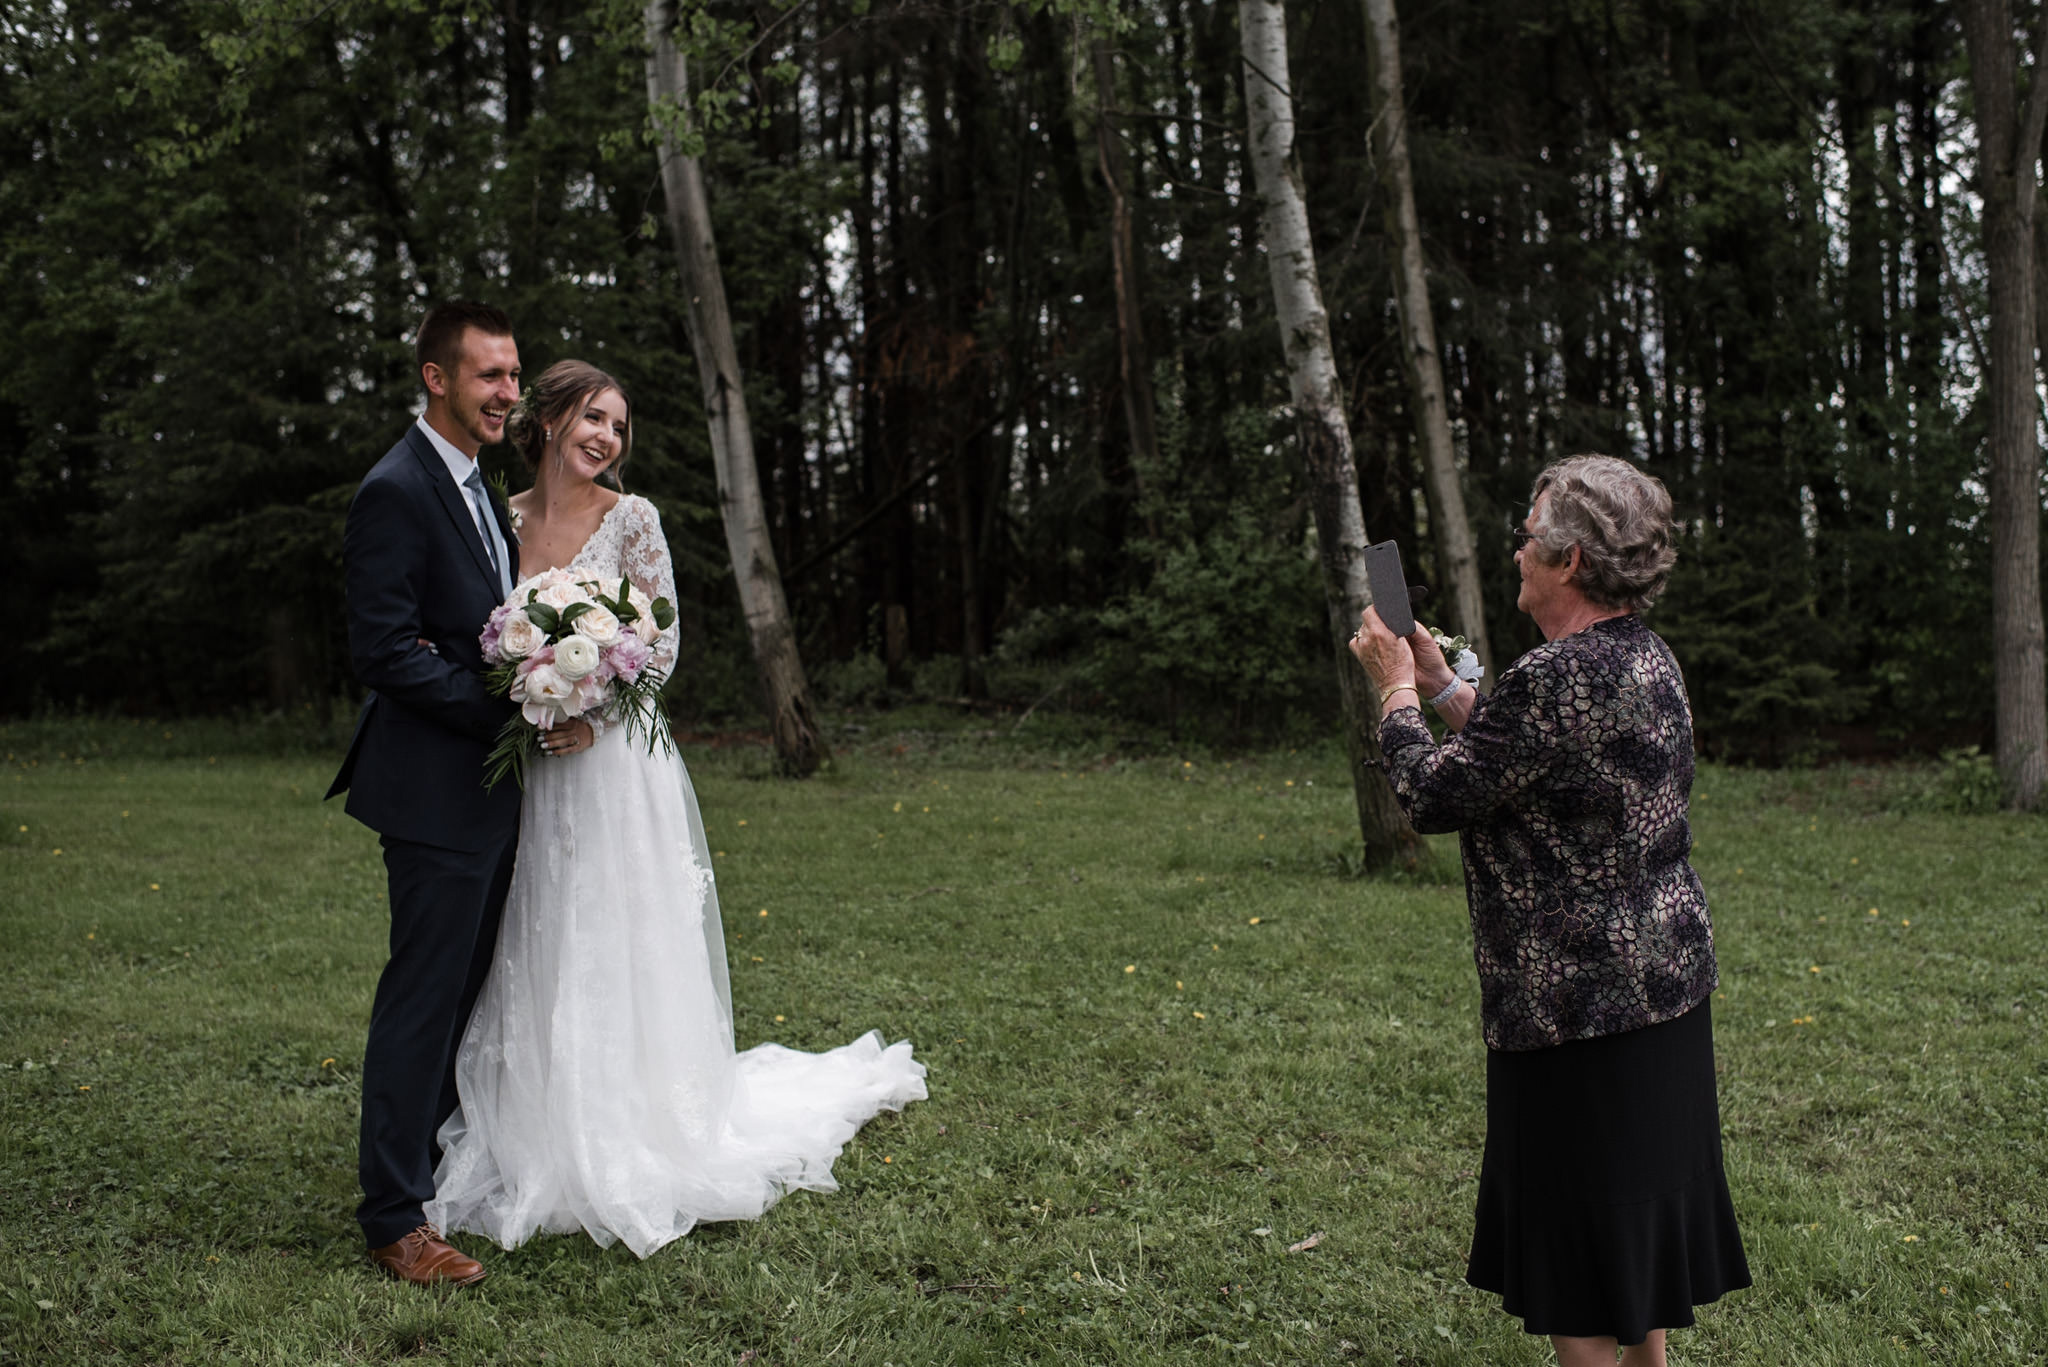 165-candid-moment-grandma-wedding-couple-forest.jpg